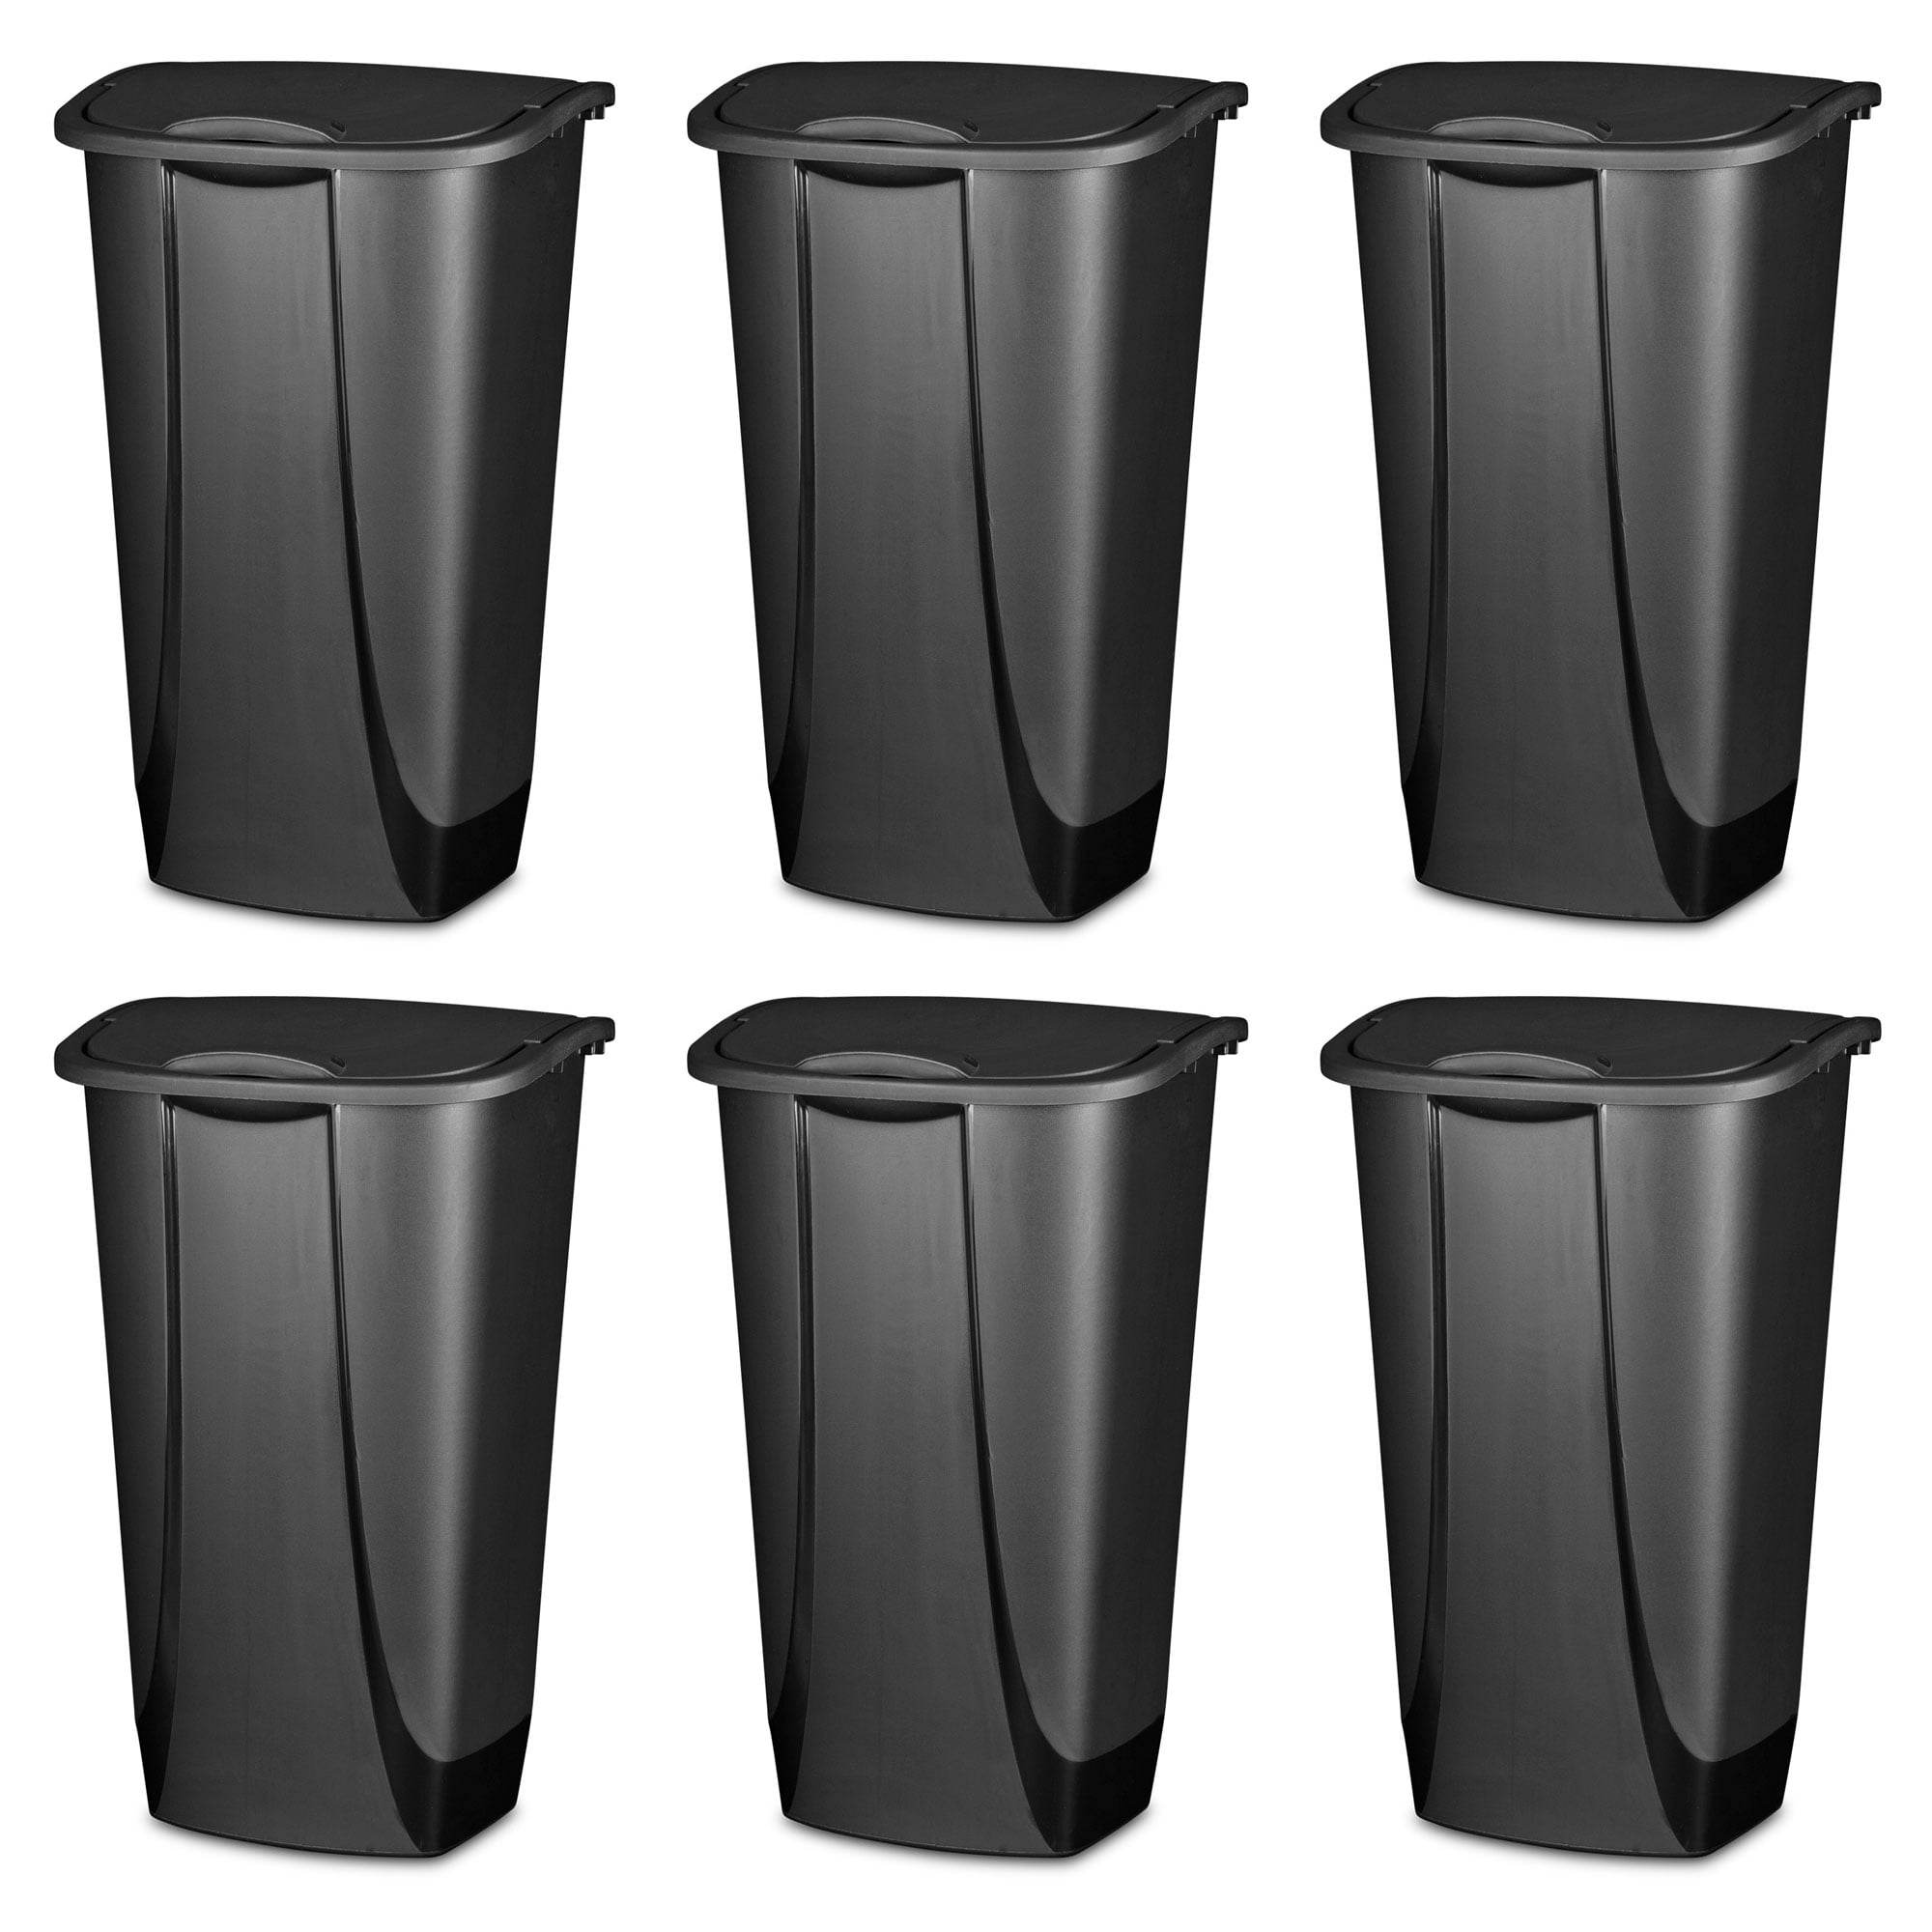 Sterilite 10539006 10 Gallon Ultra Plastic Wastebasket Trash Can 6 Pack Black 